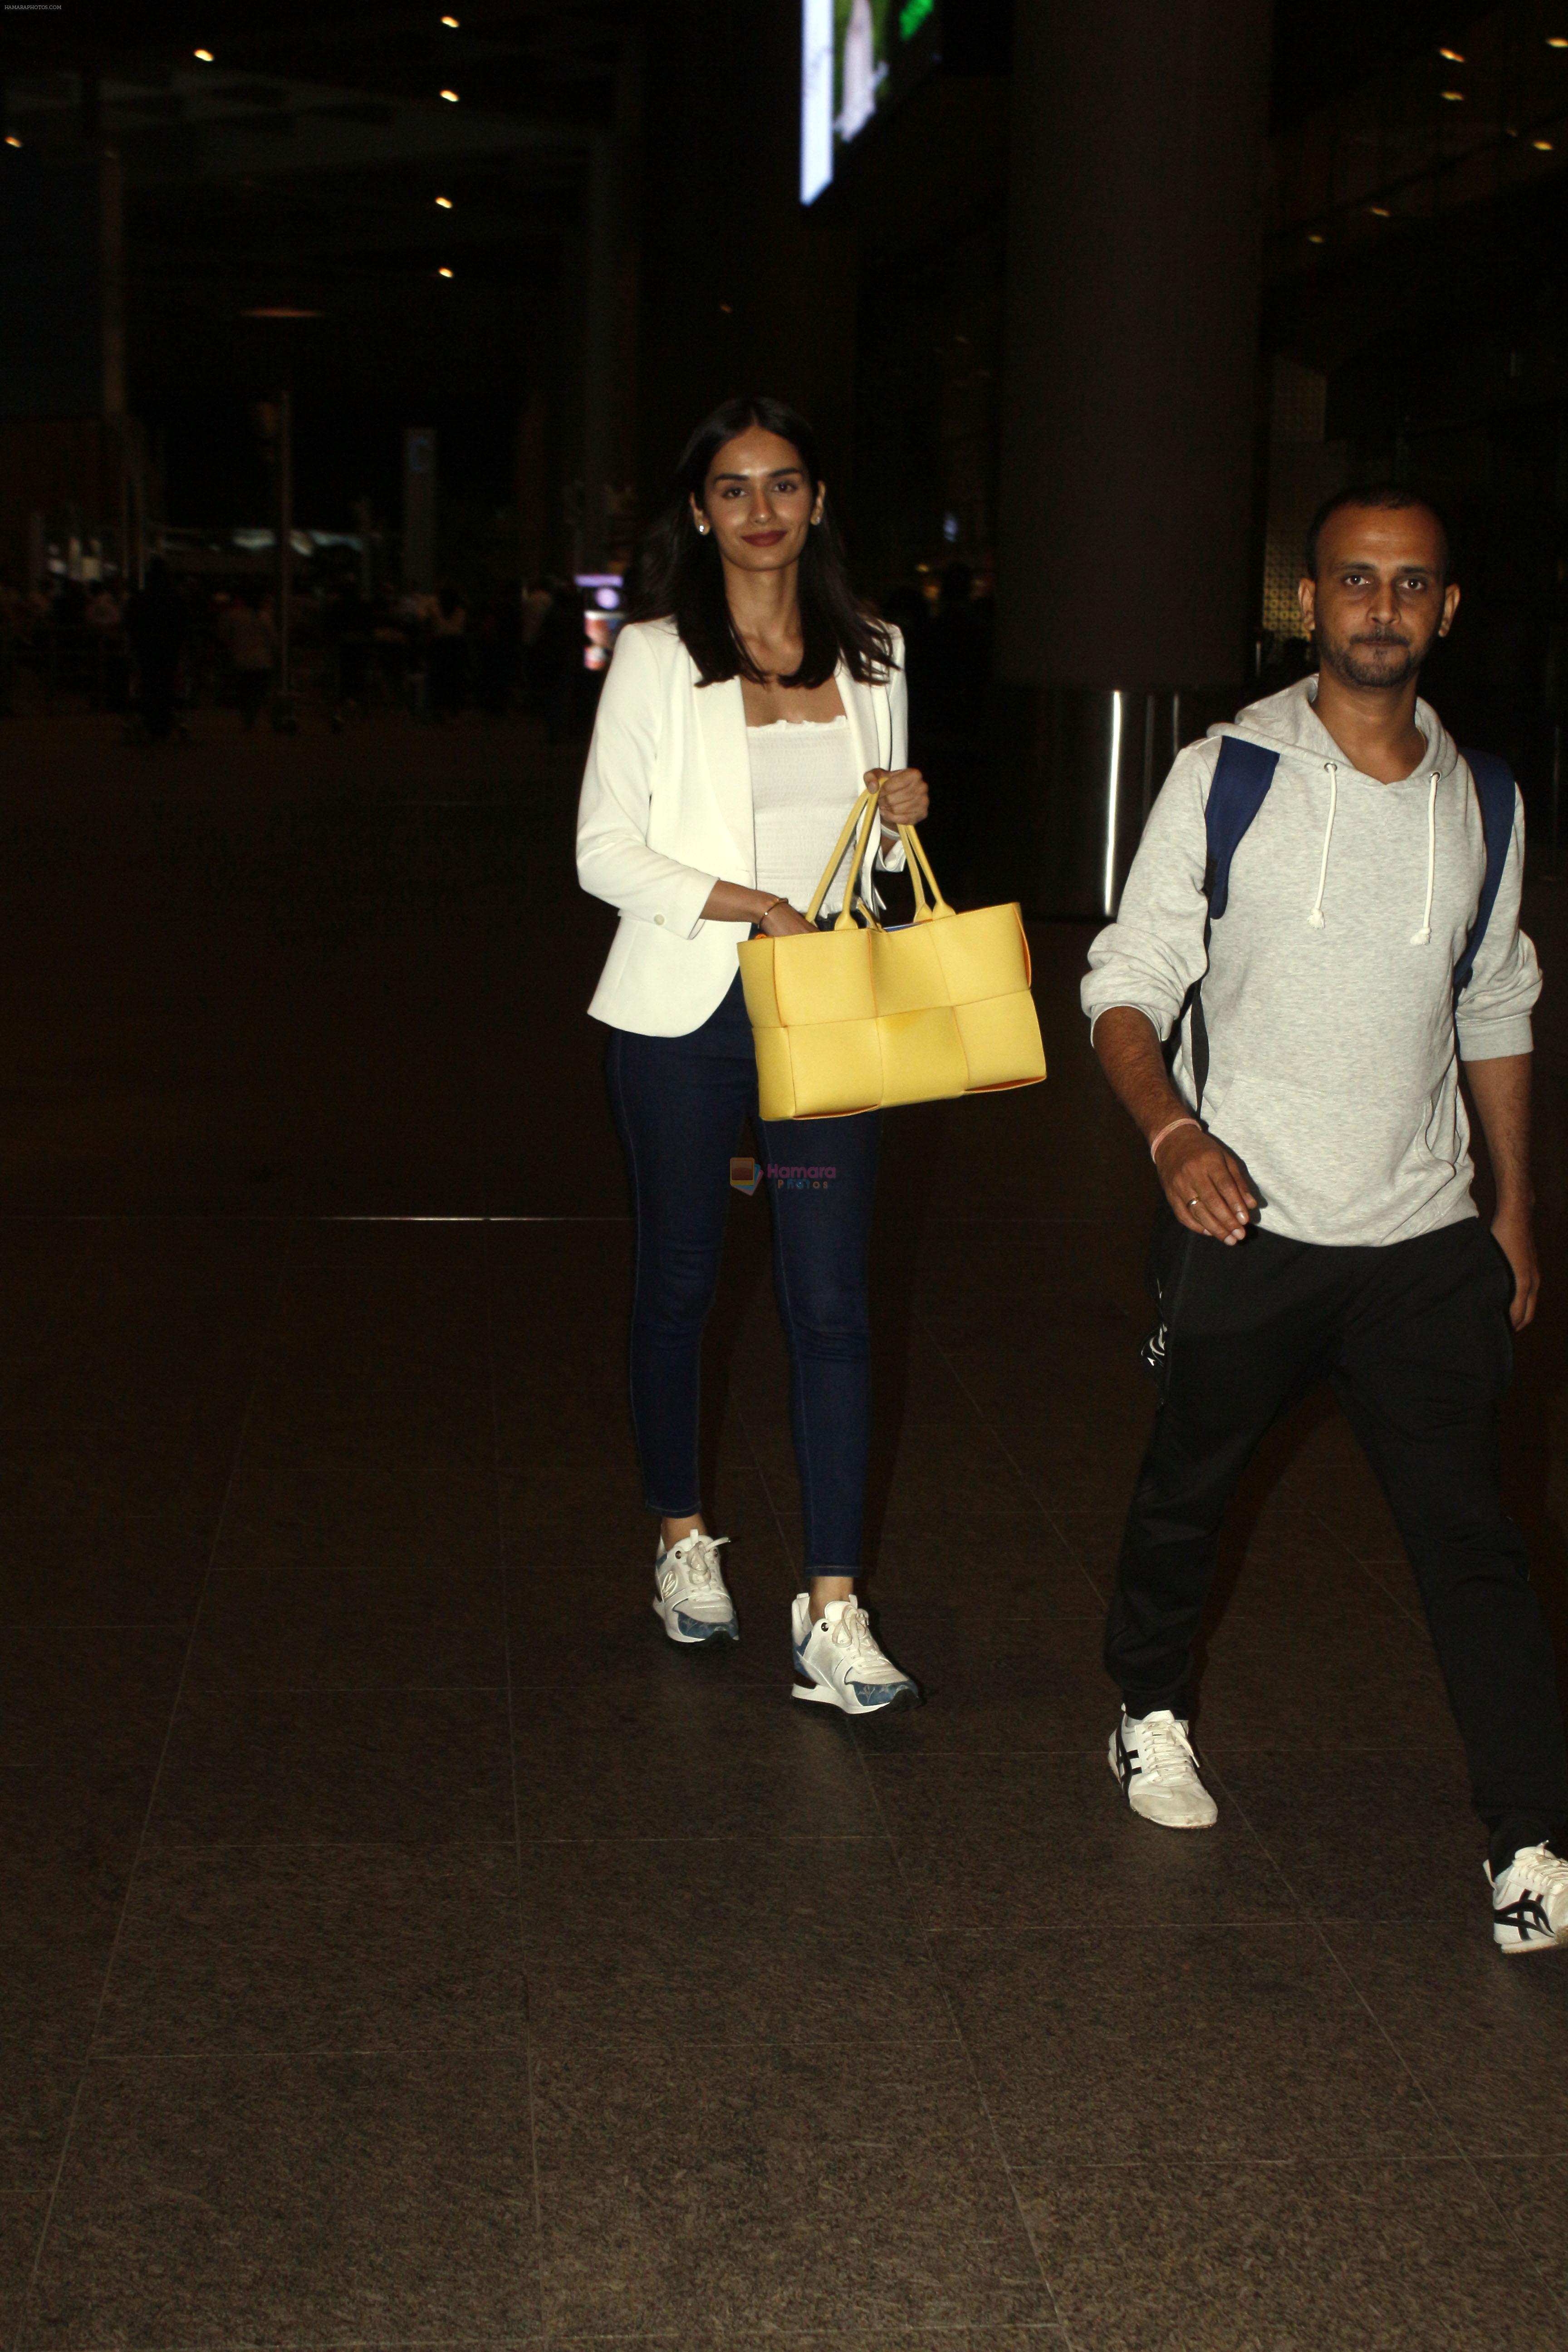 Manushi Chhillar seen in white and blue holding Bottega Veneta Handbag at the airport on 6 July 2023